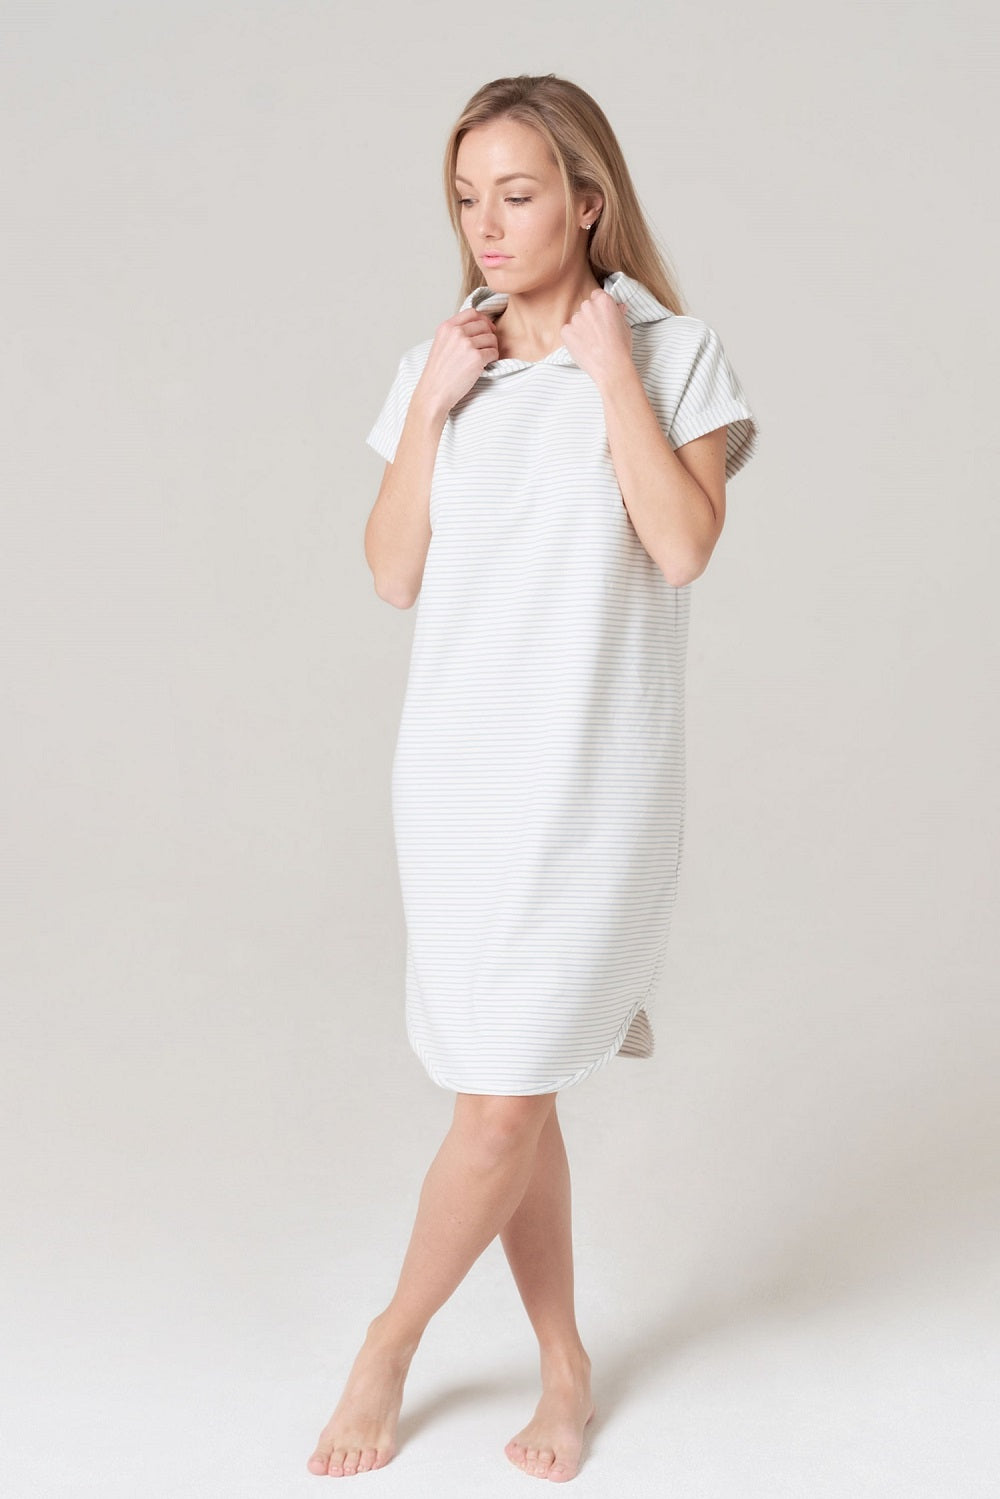  Striped Tunic Dress with Hood - Shop Online | victorymax.com.au